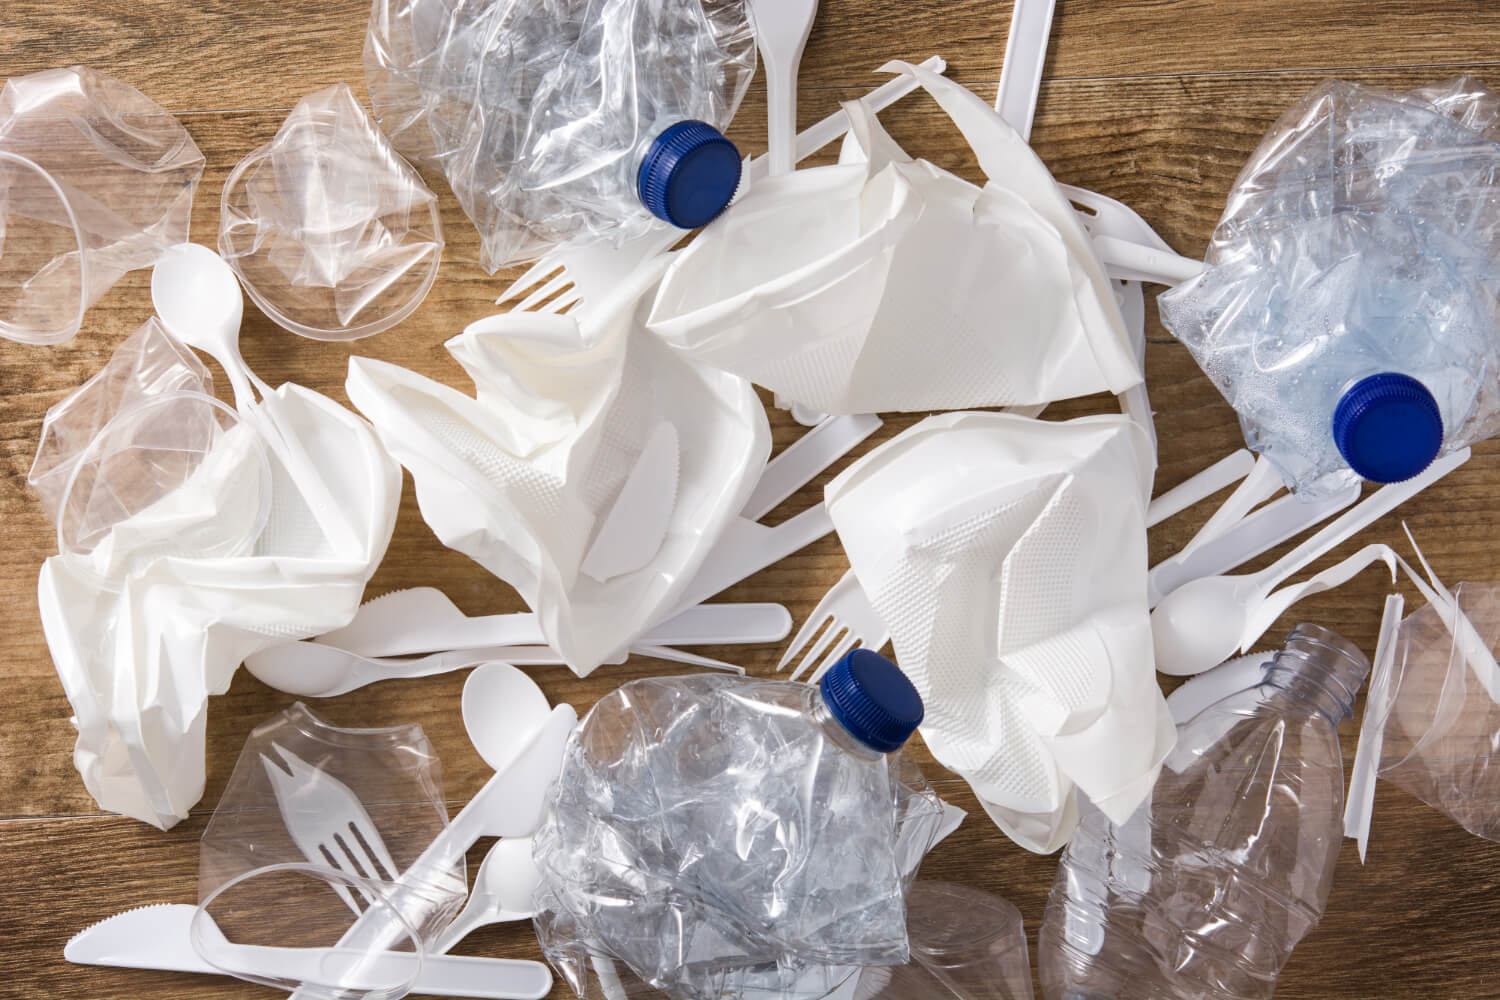 Reducing plastic at home – 11 ways